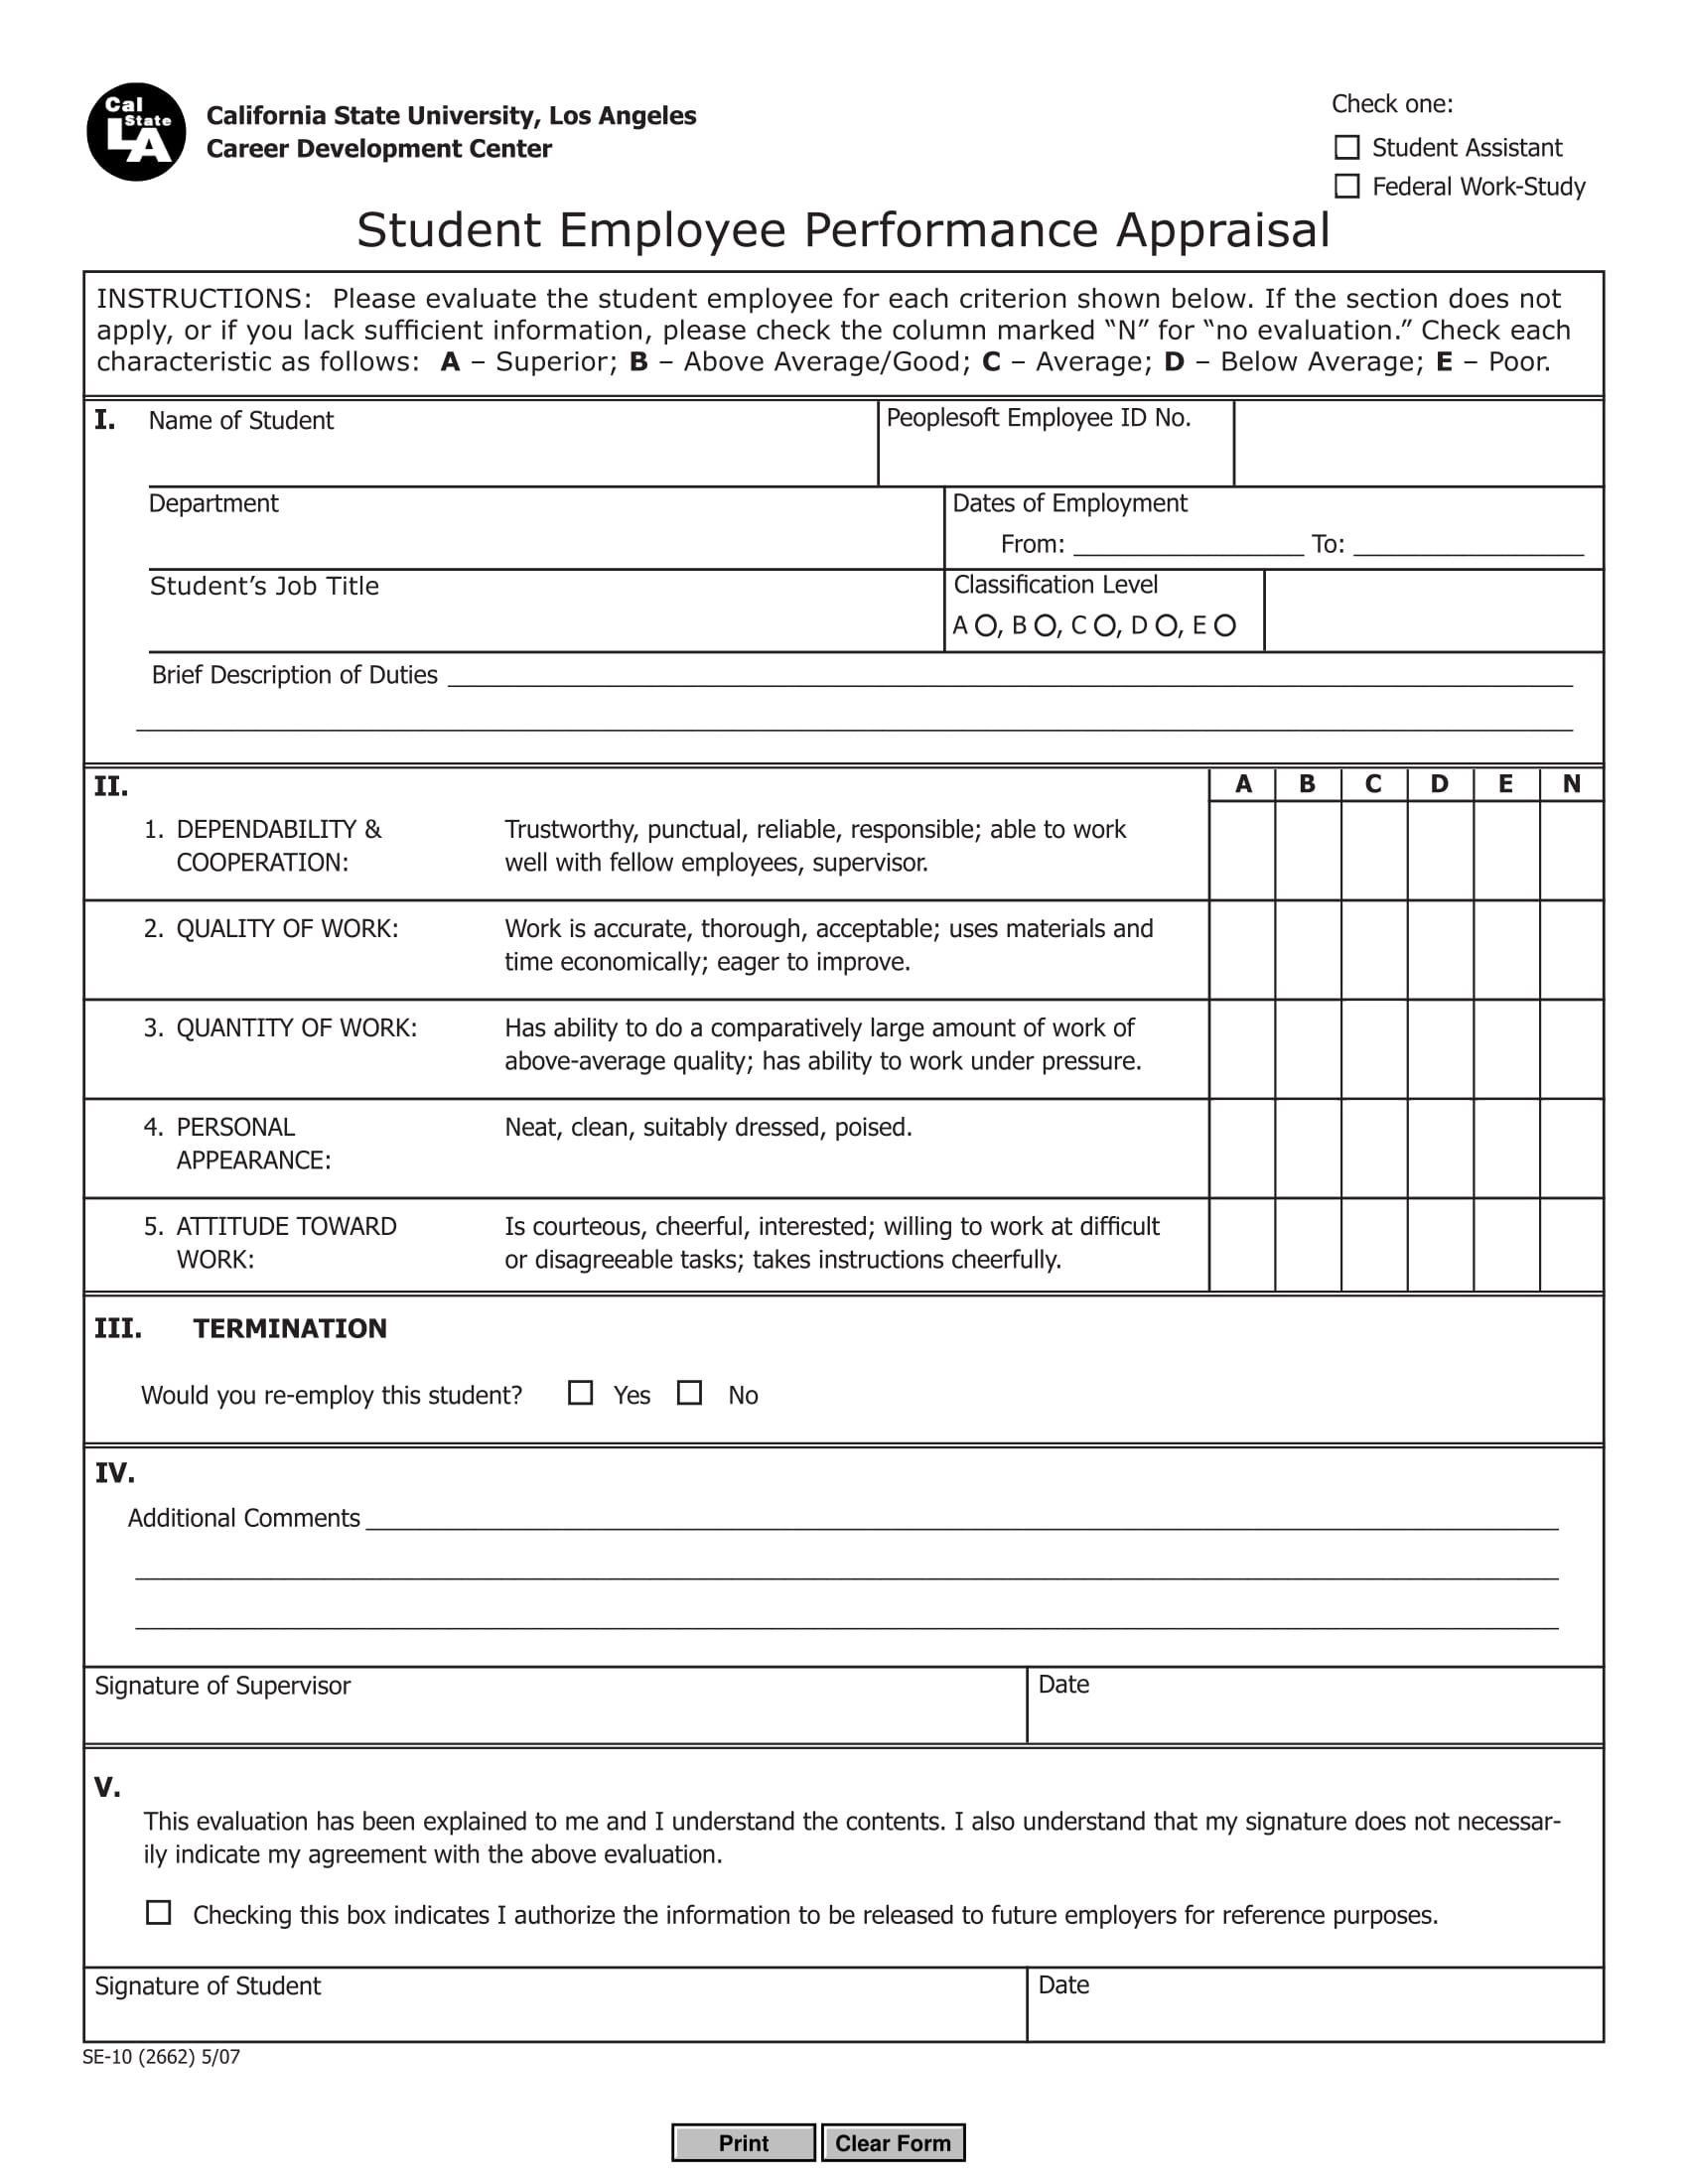 student employee performance appraisal form 1